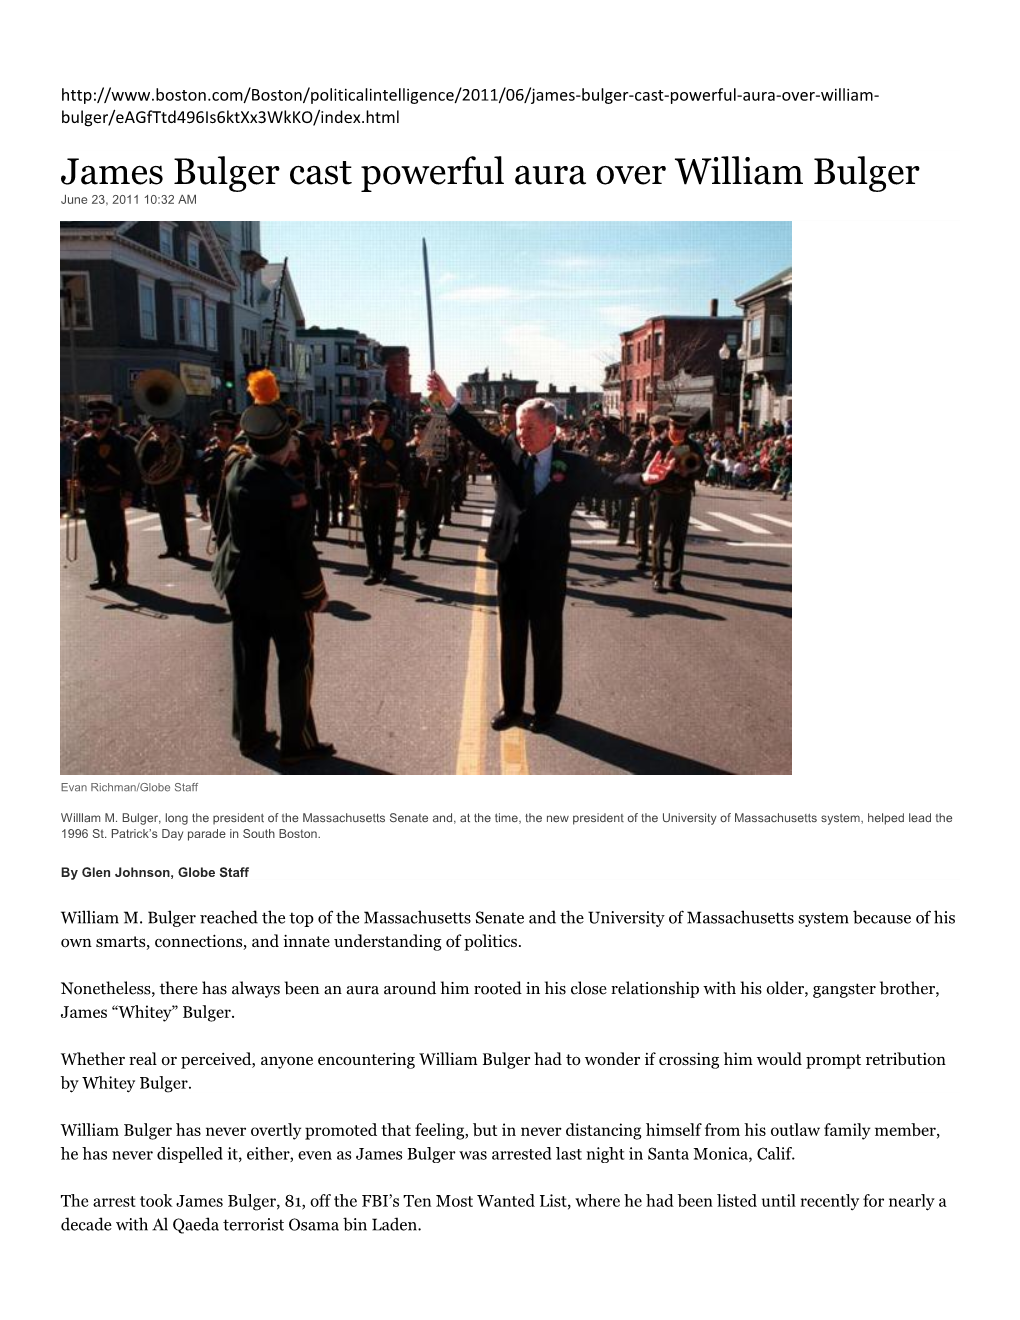 James Bulger Cast Powerful Aura Over William Bulger